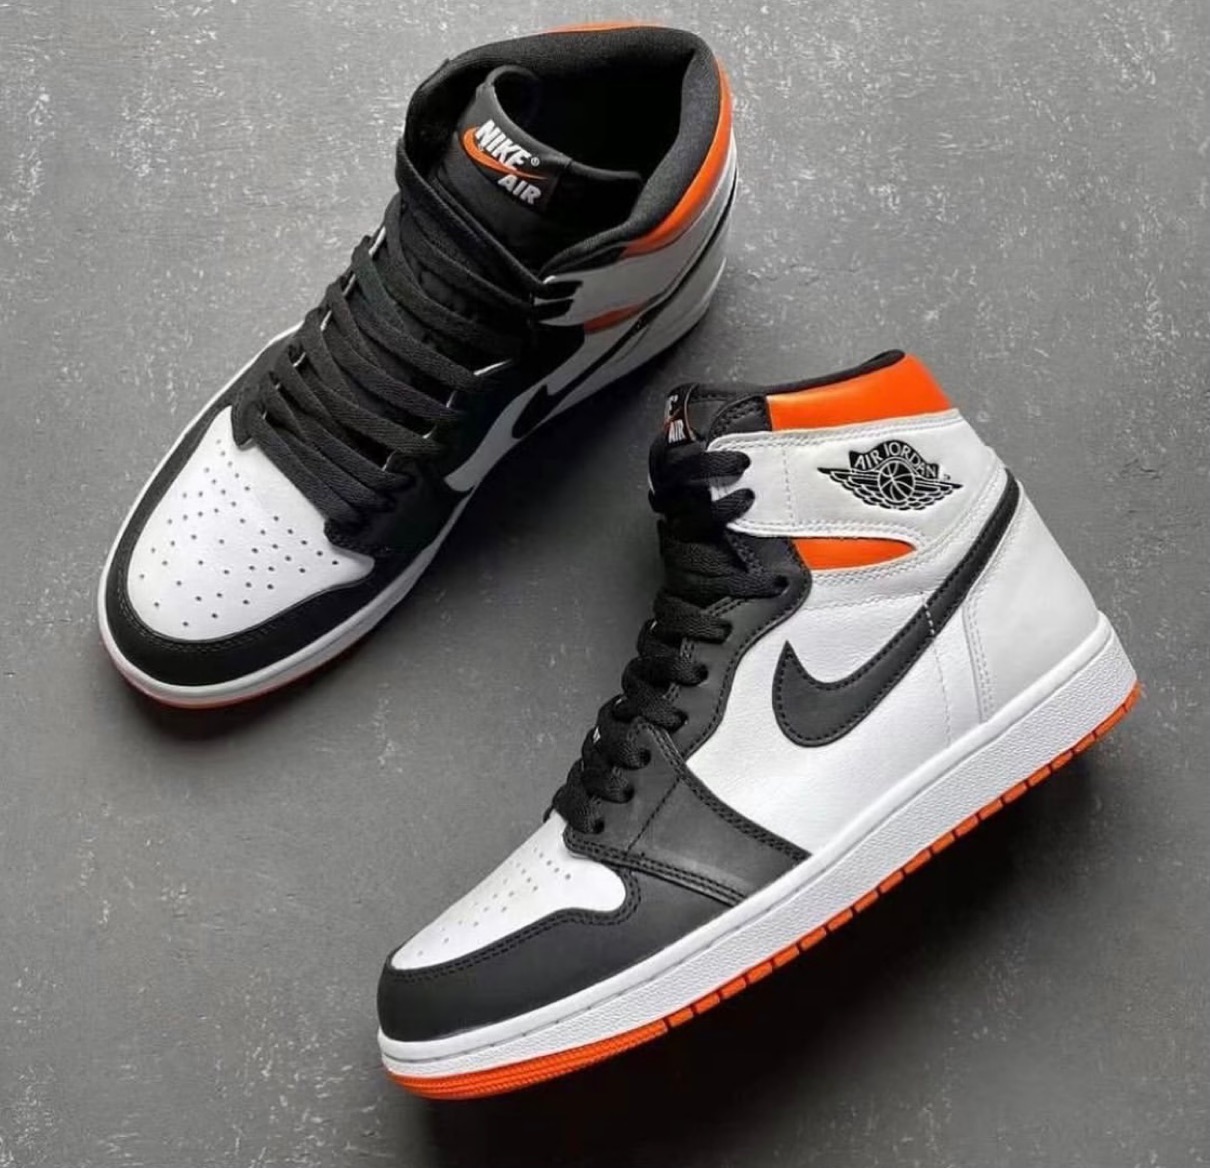 Nike】Air Jordan 1 Retro High OG “Electro Orange”が国内7月26日に 